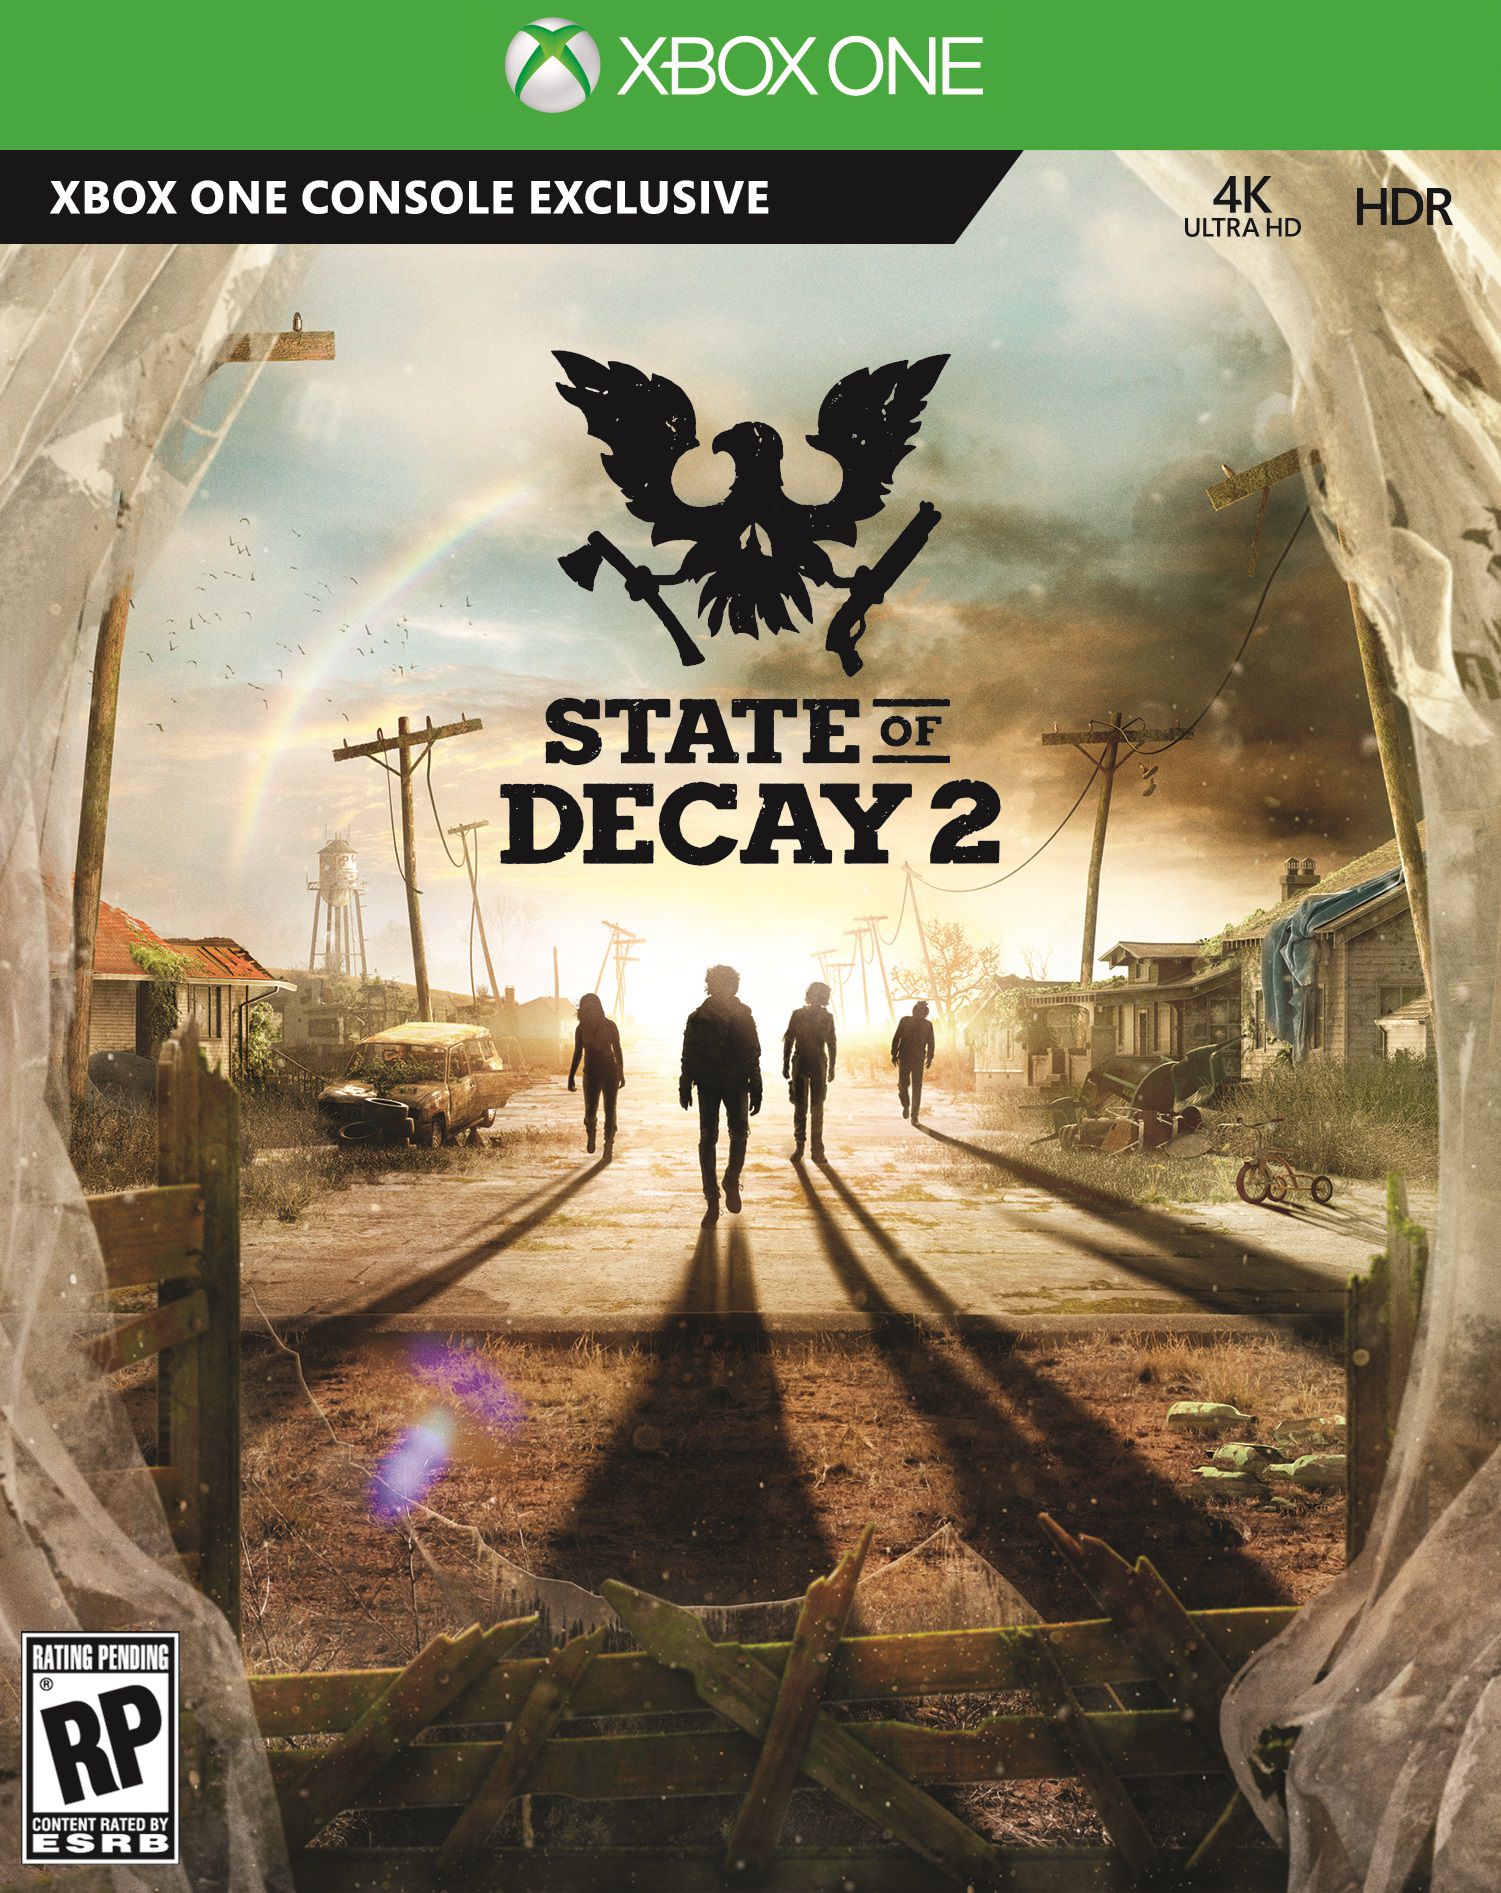 State of Decay 2 - Assista 25 minutos de gameplay!